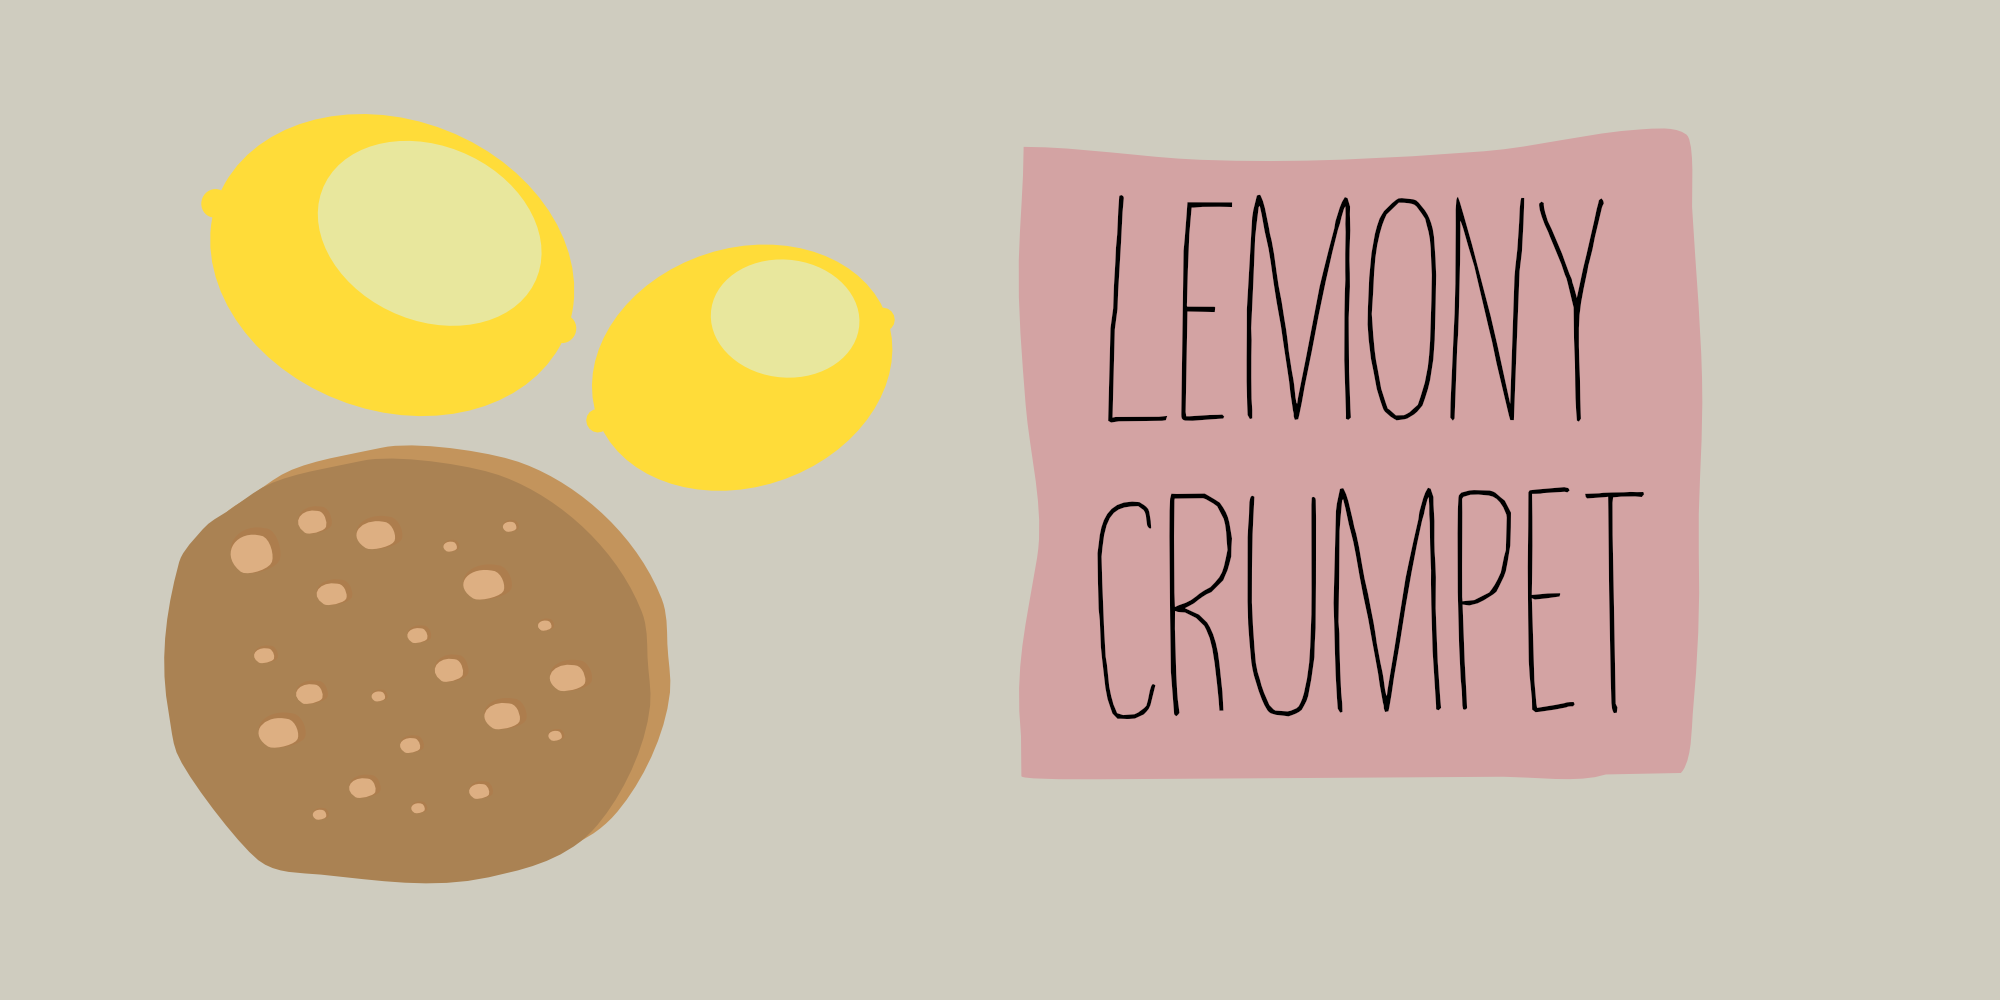 Lemony Crumpet